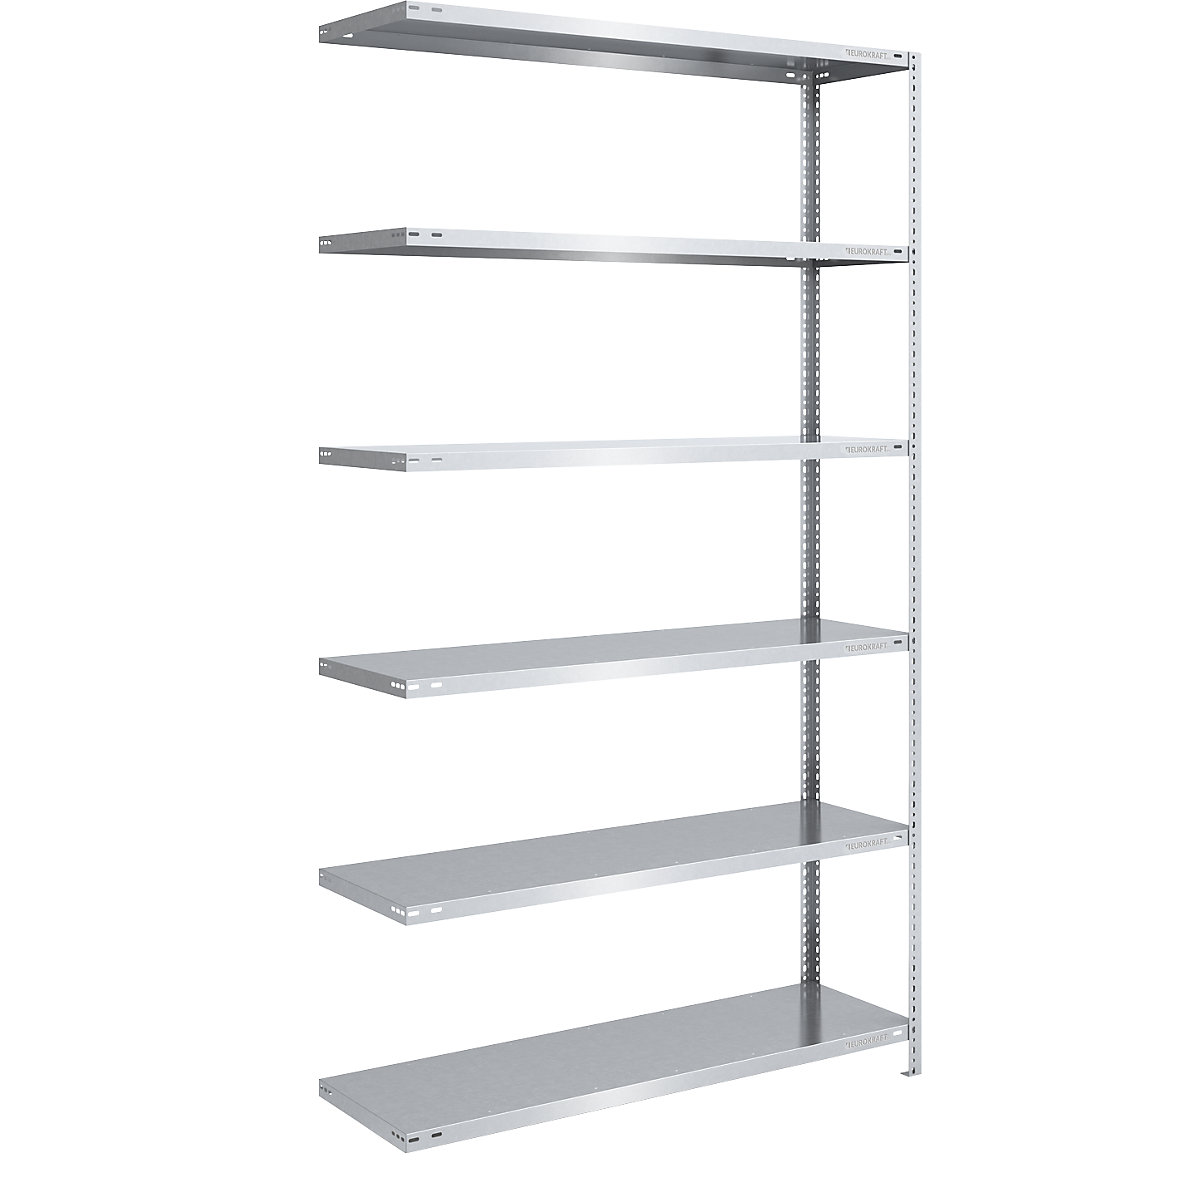 Bolt-together storage shelving, zinc plated, medium duty – eurokraft pro, shelf unit height 2500 mm, shelf width 1300 mm, depth 500 mm, extension shelf unit-10